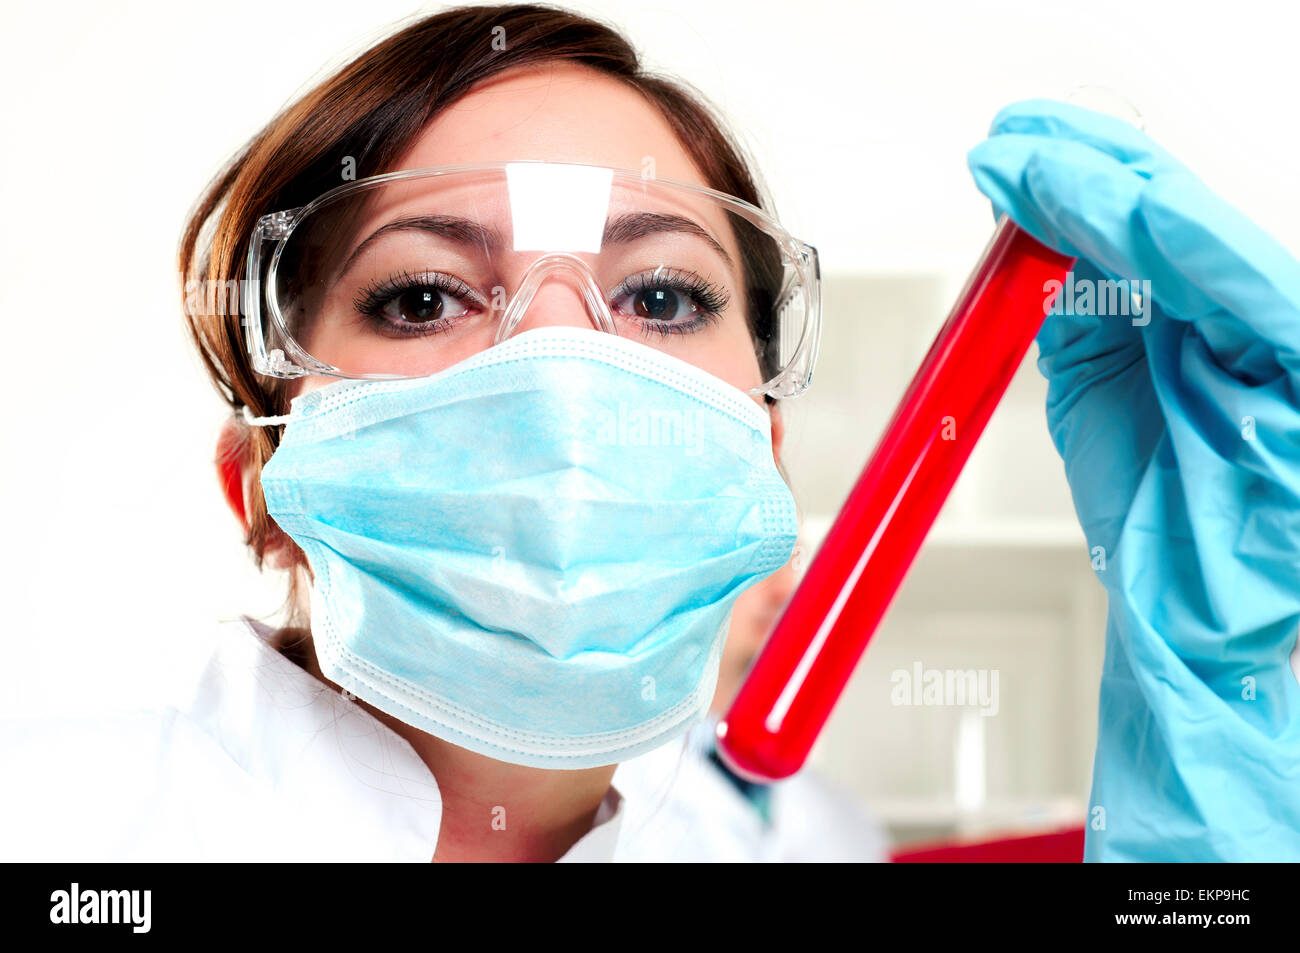 chemist working in the laboratory Stock Photo